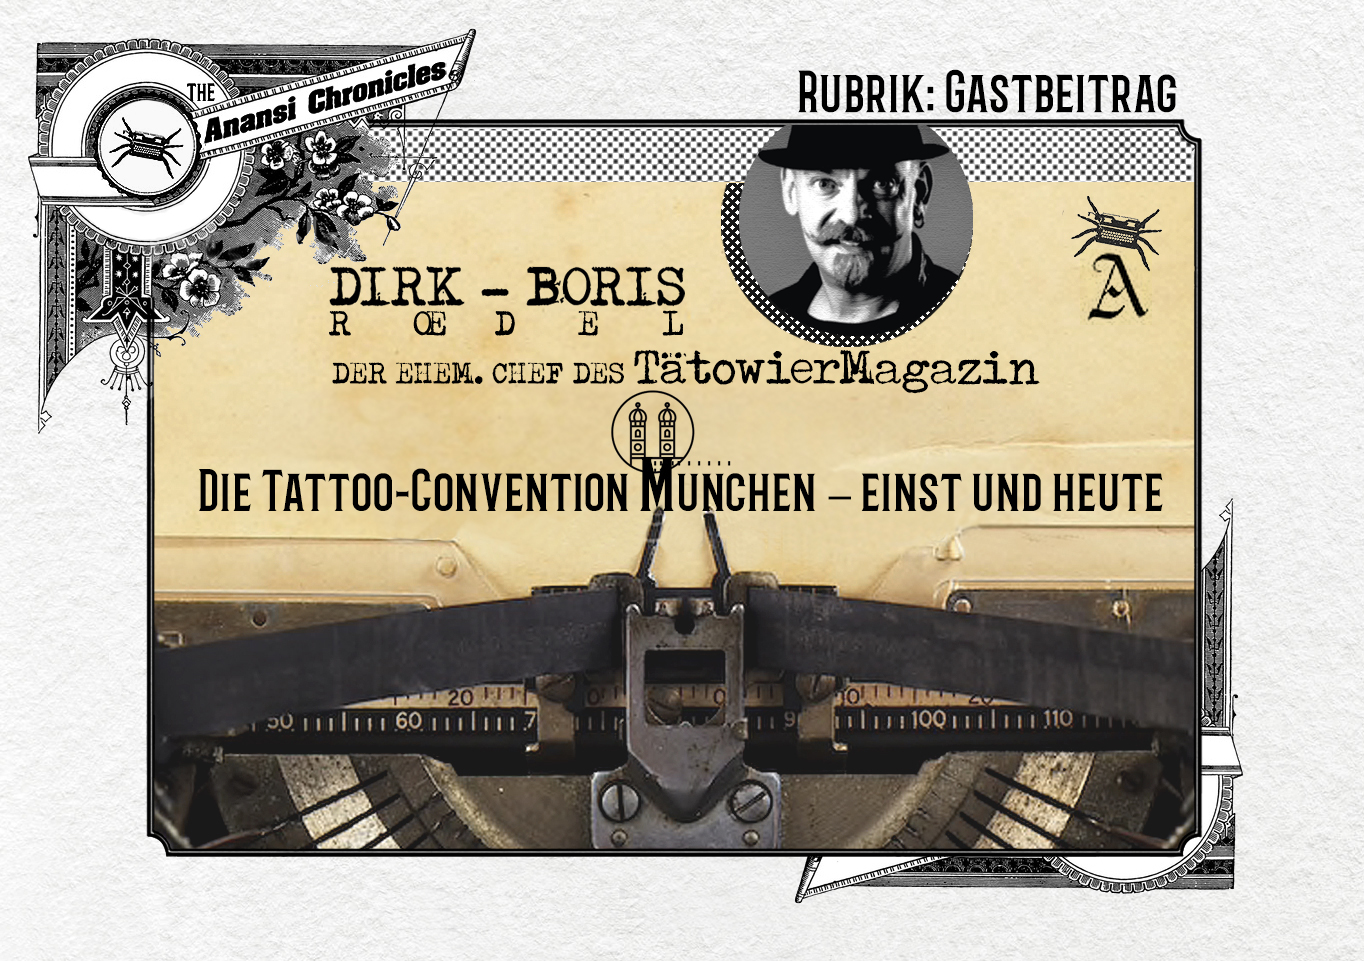 Dirk Boris Rödel Chef Redakteur Tätowiermagazin Artikel Anansi Chronicles München Tattoo best